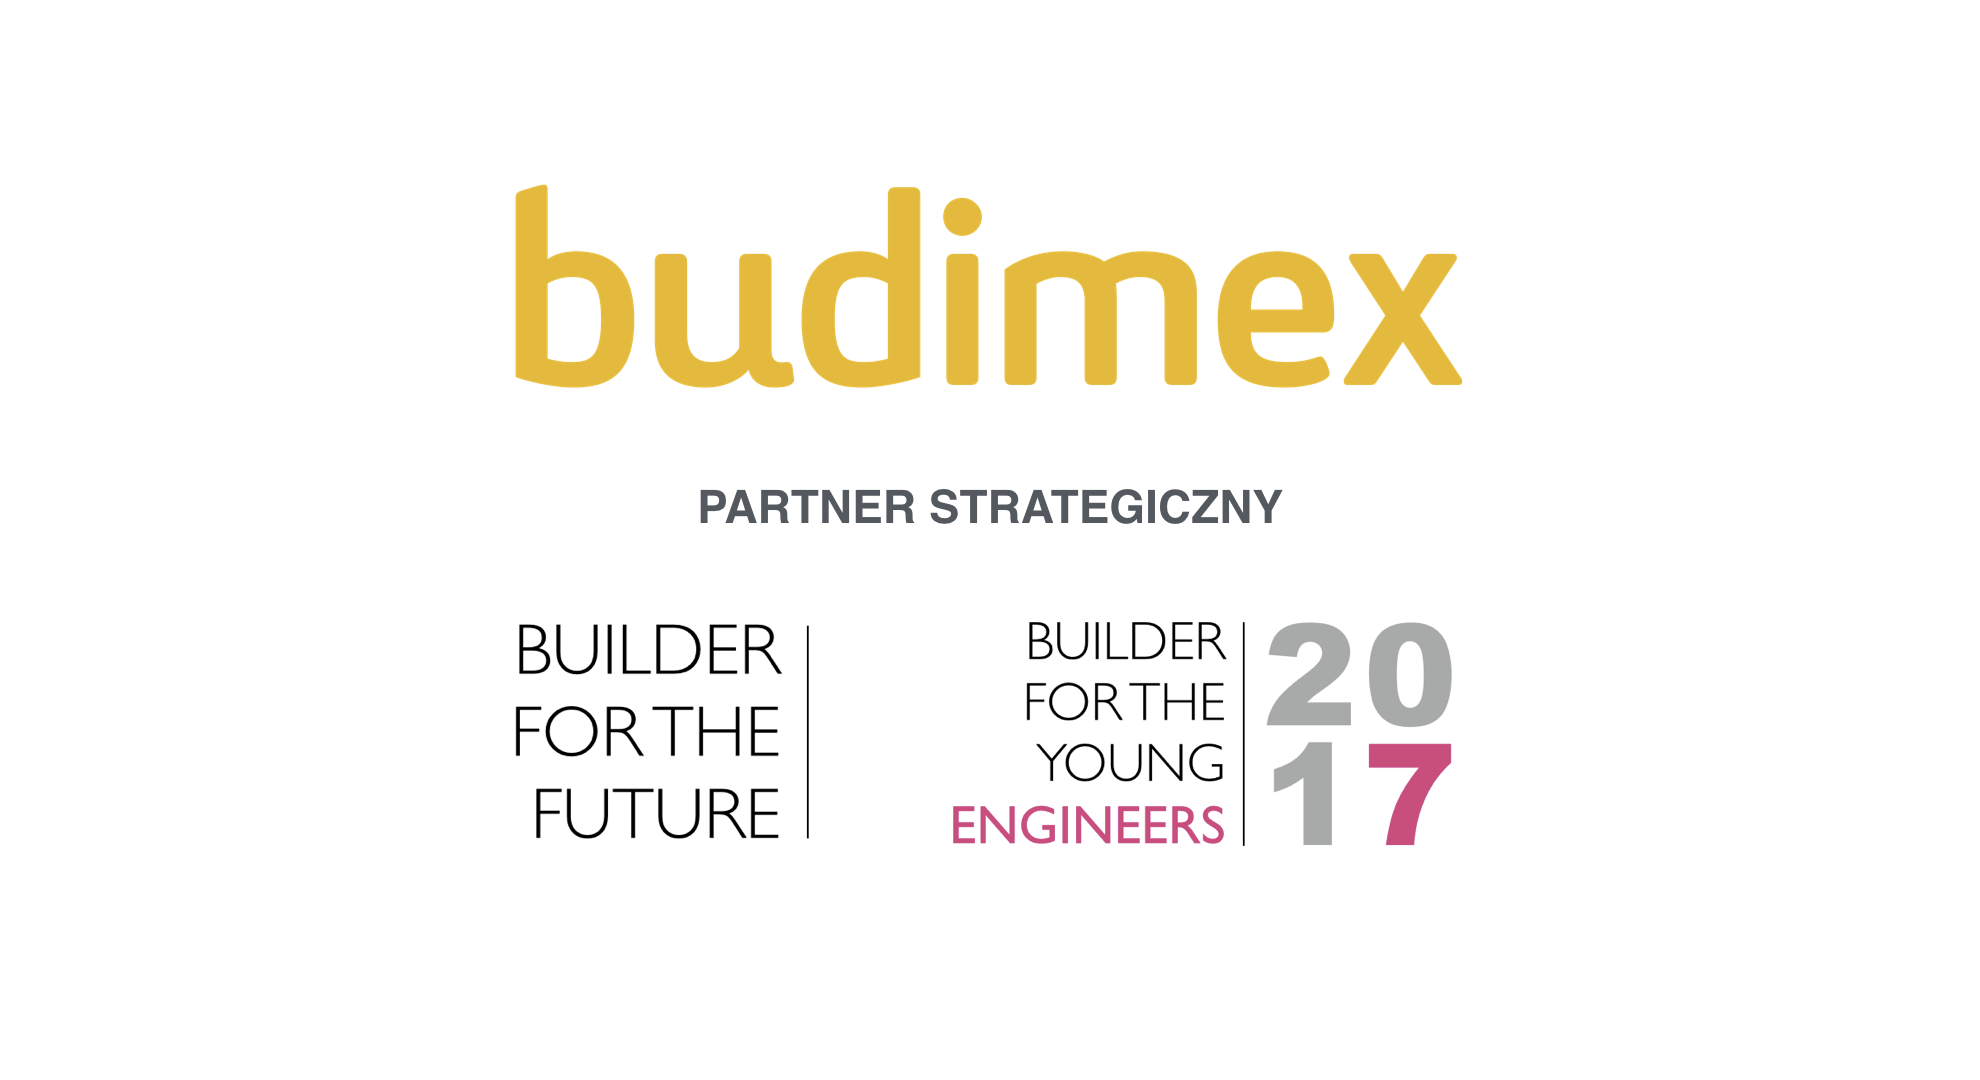 BUDIMEX FOR THE FUTURE